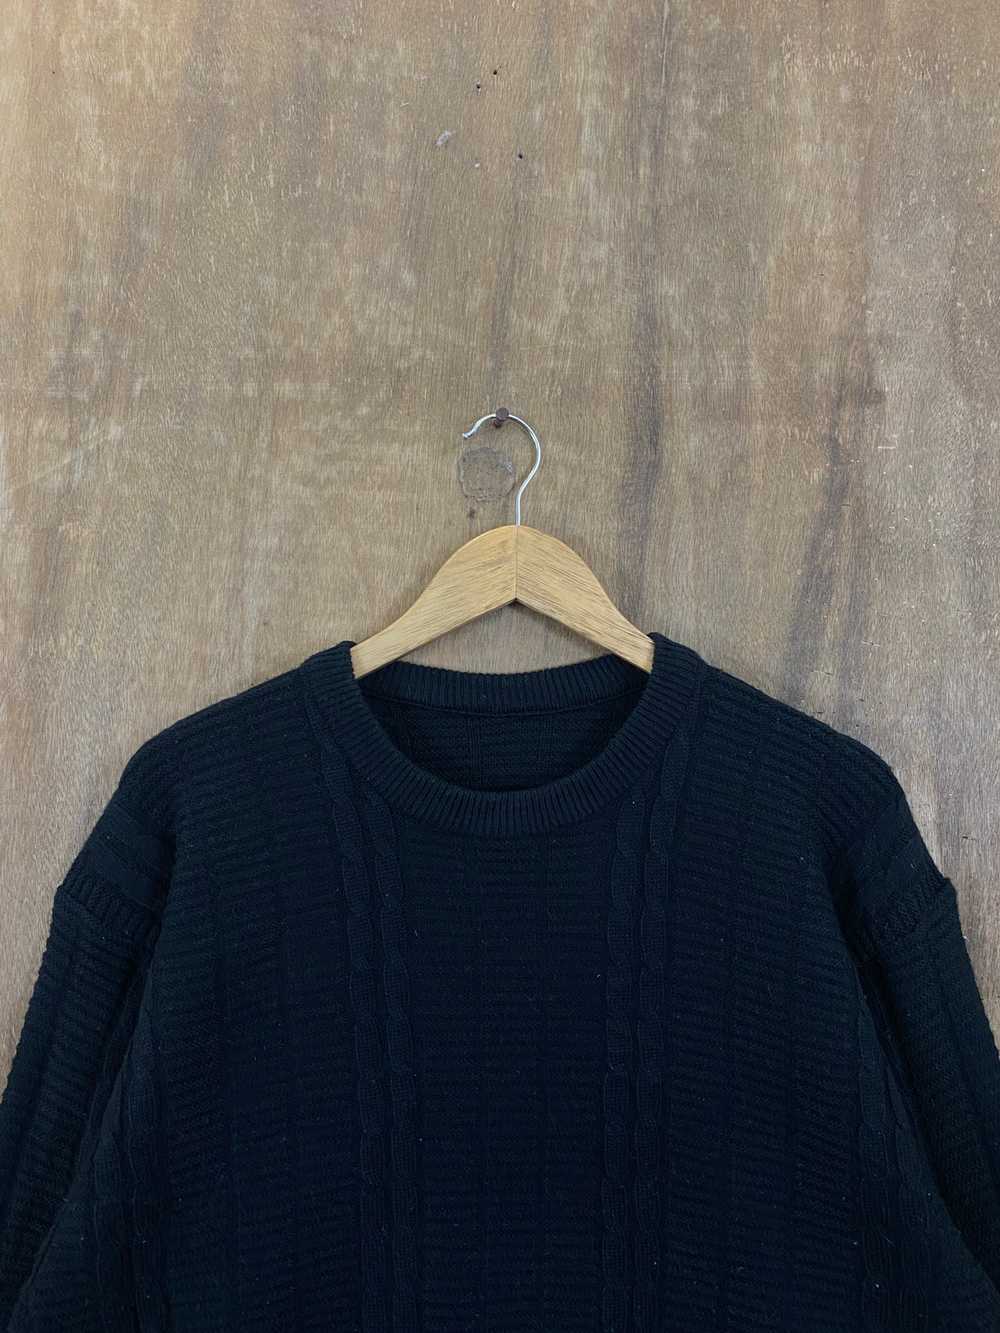 Japanese Brand - Japanese Brand Black Knit Sweate… - image 2